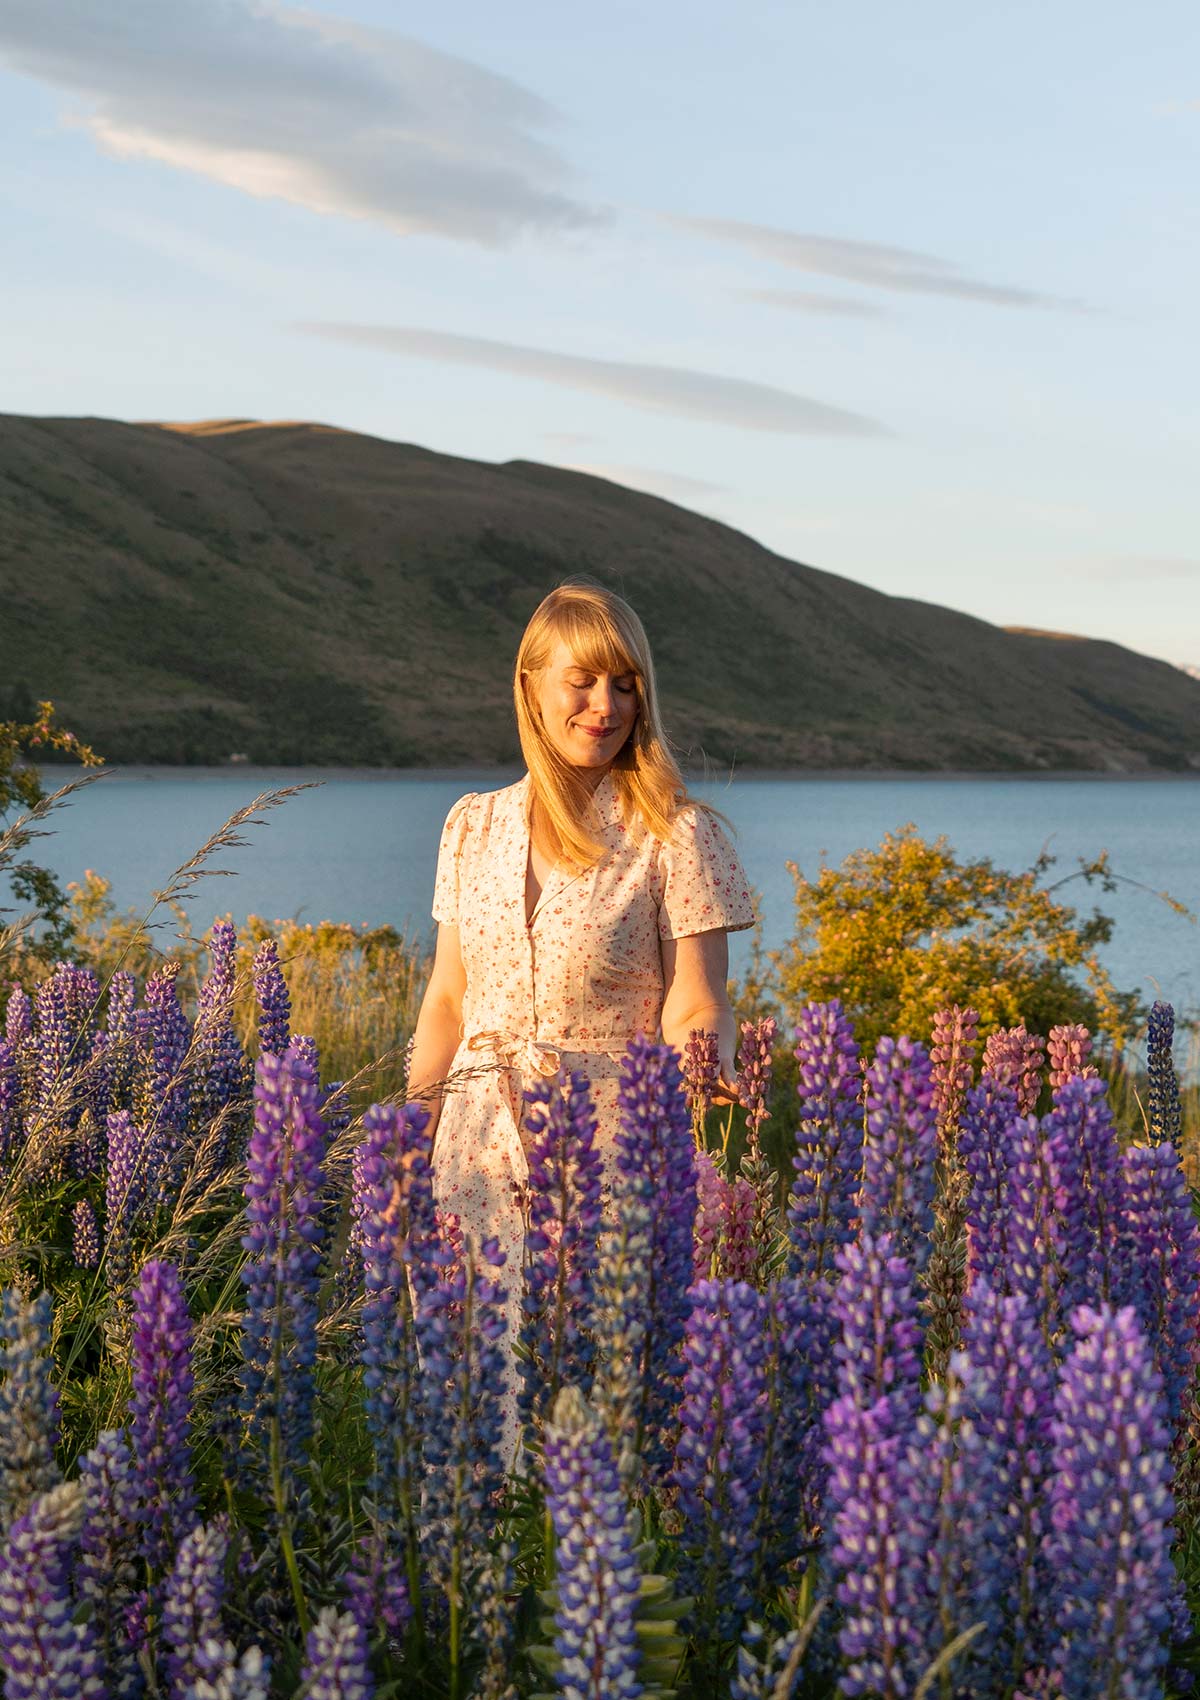 Fleurs de Lupins, lac Tekapo, île du Sud, Nouvelle-Zélande / Lupines Flowers, Lake Tekapo, South Island, New Zealand, NZ